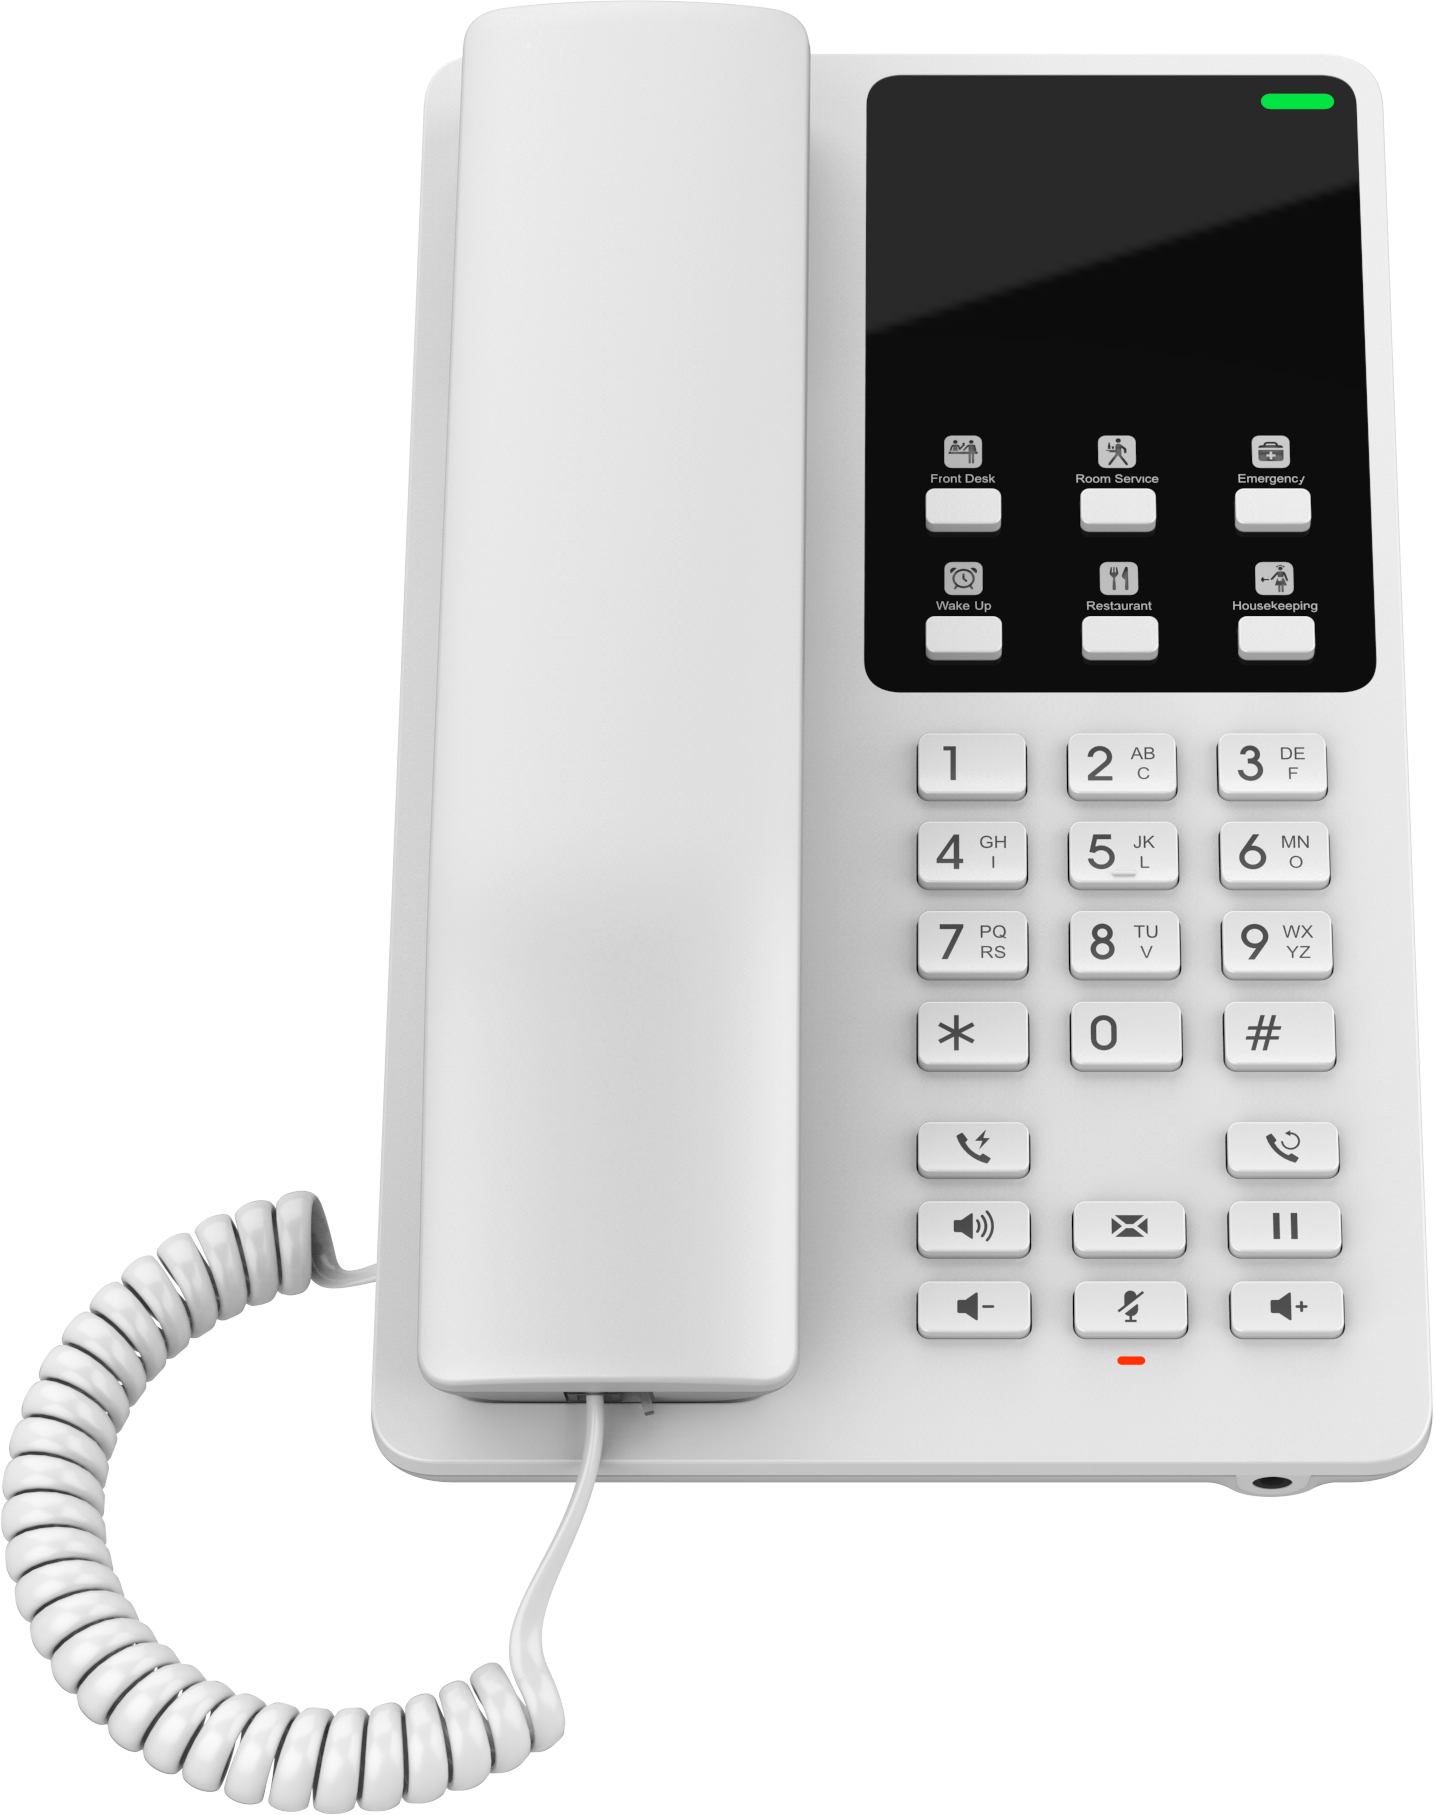 DESKTOP HOTEL PHONE W/ BUILT-IN WIFI - WHITE image